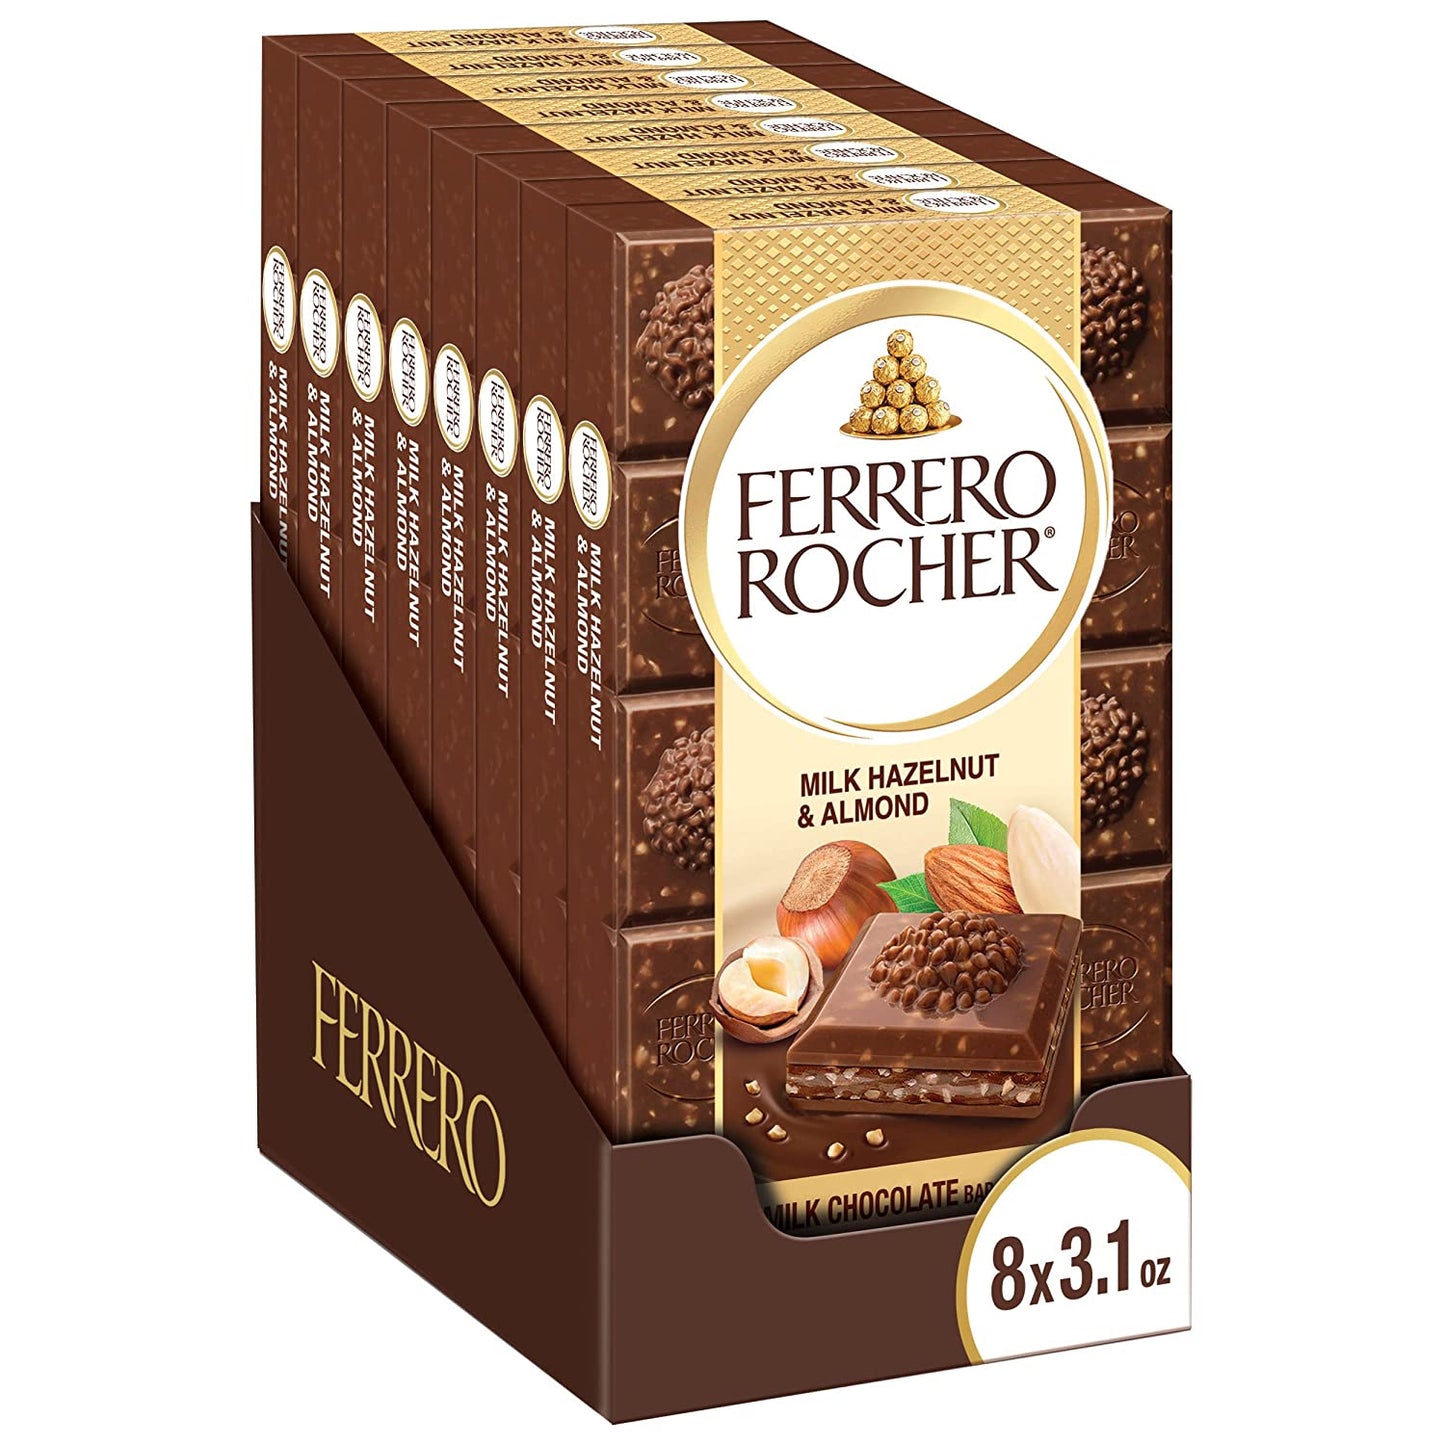 Ferrero Rocher Premium Chocolate Bars—Milk Chocolate Hazelnut & Almond Individually Wrapped—8 Pack—3.1 oz. each